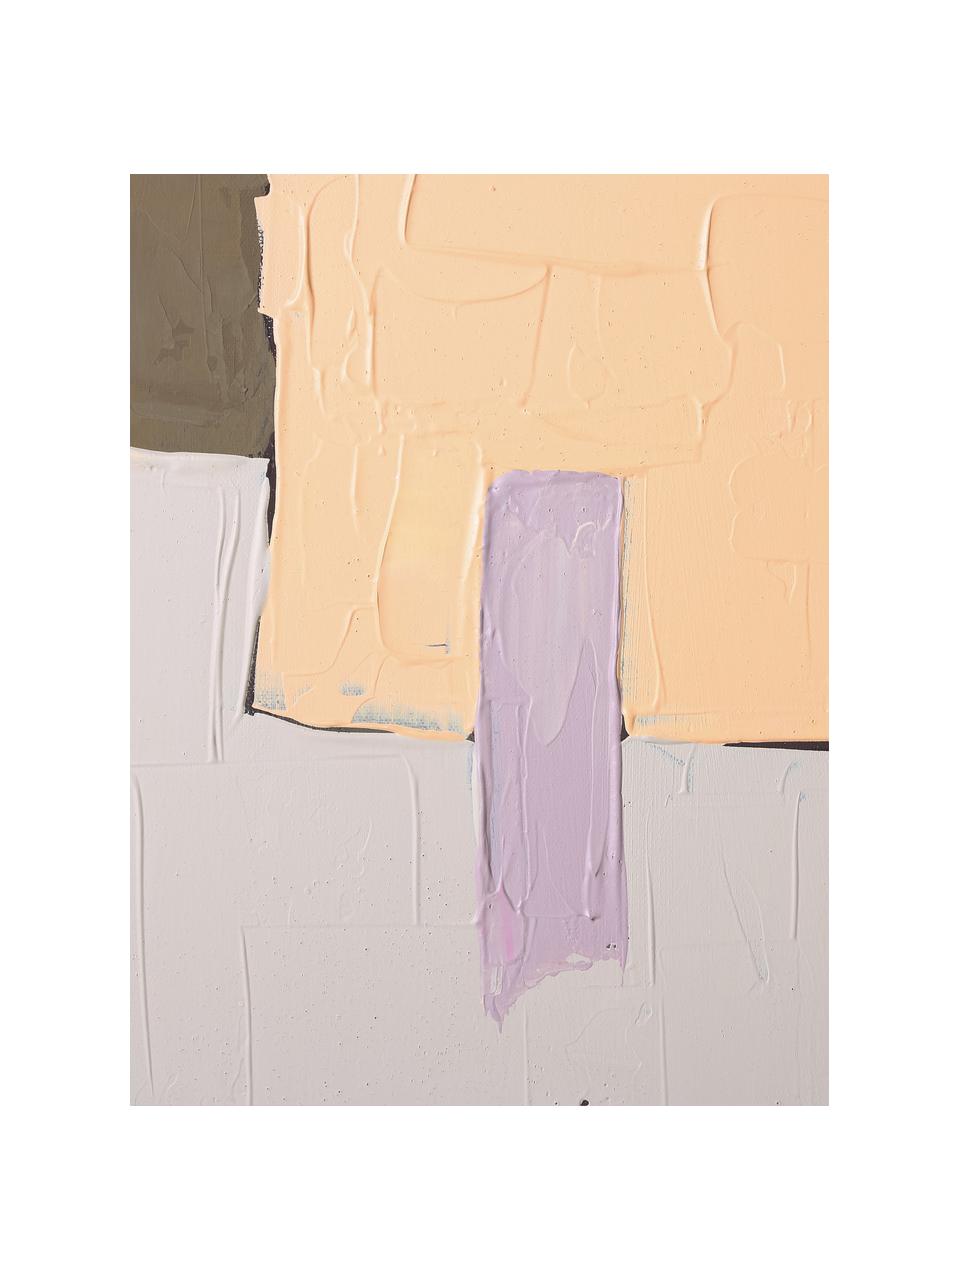 Gerahmtes Leinwandbild Olivia, Bild: Leinwand, Farbe, Rahmen: Eschenholz, Braun, Rosa, Cremefarben, B 100 x H 120 cm